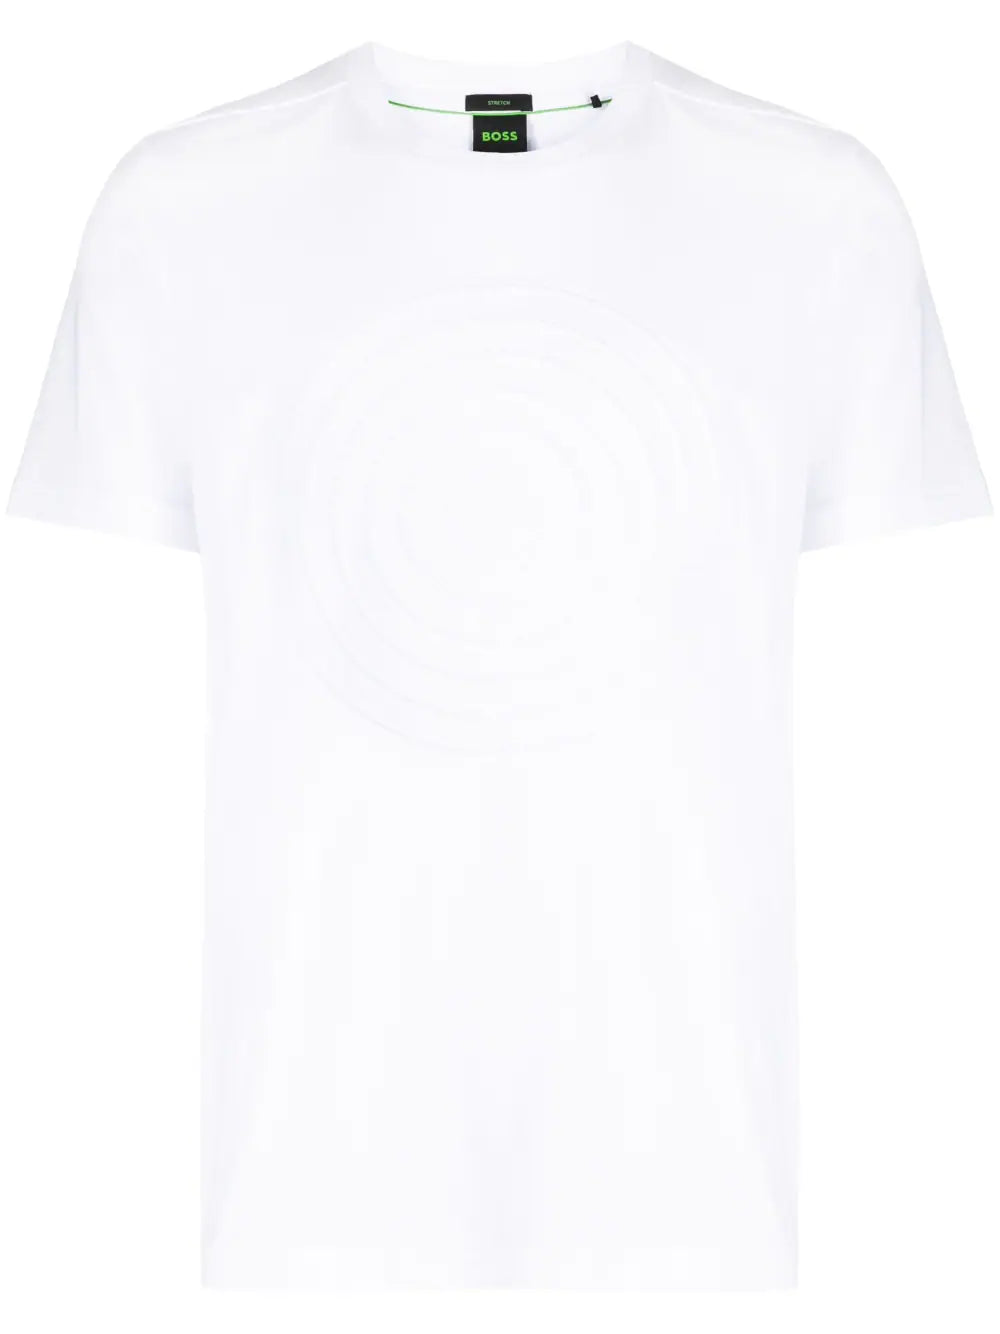 BOSS Tee 12 T-shirt White - MAISONDEFASHION.COM